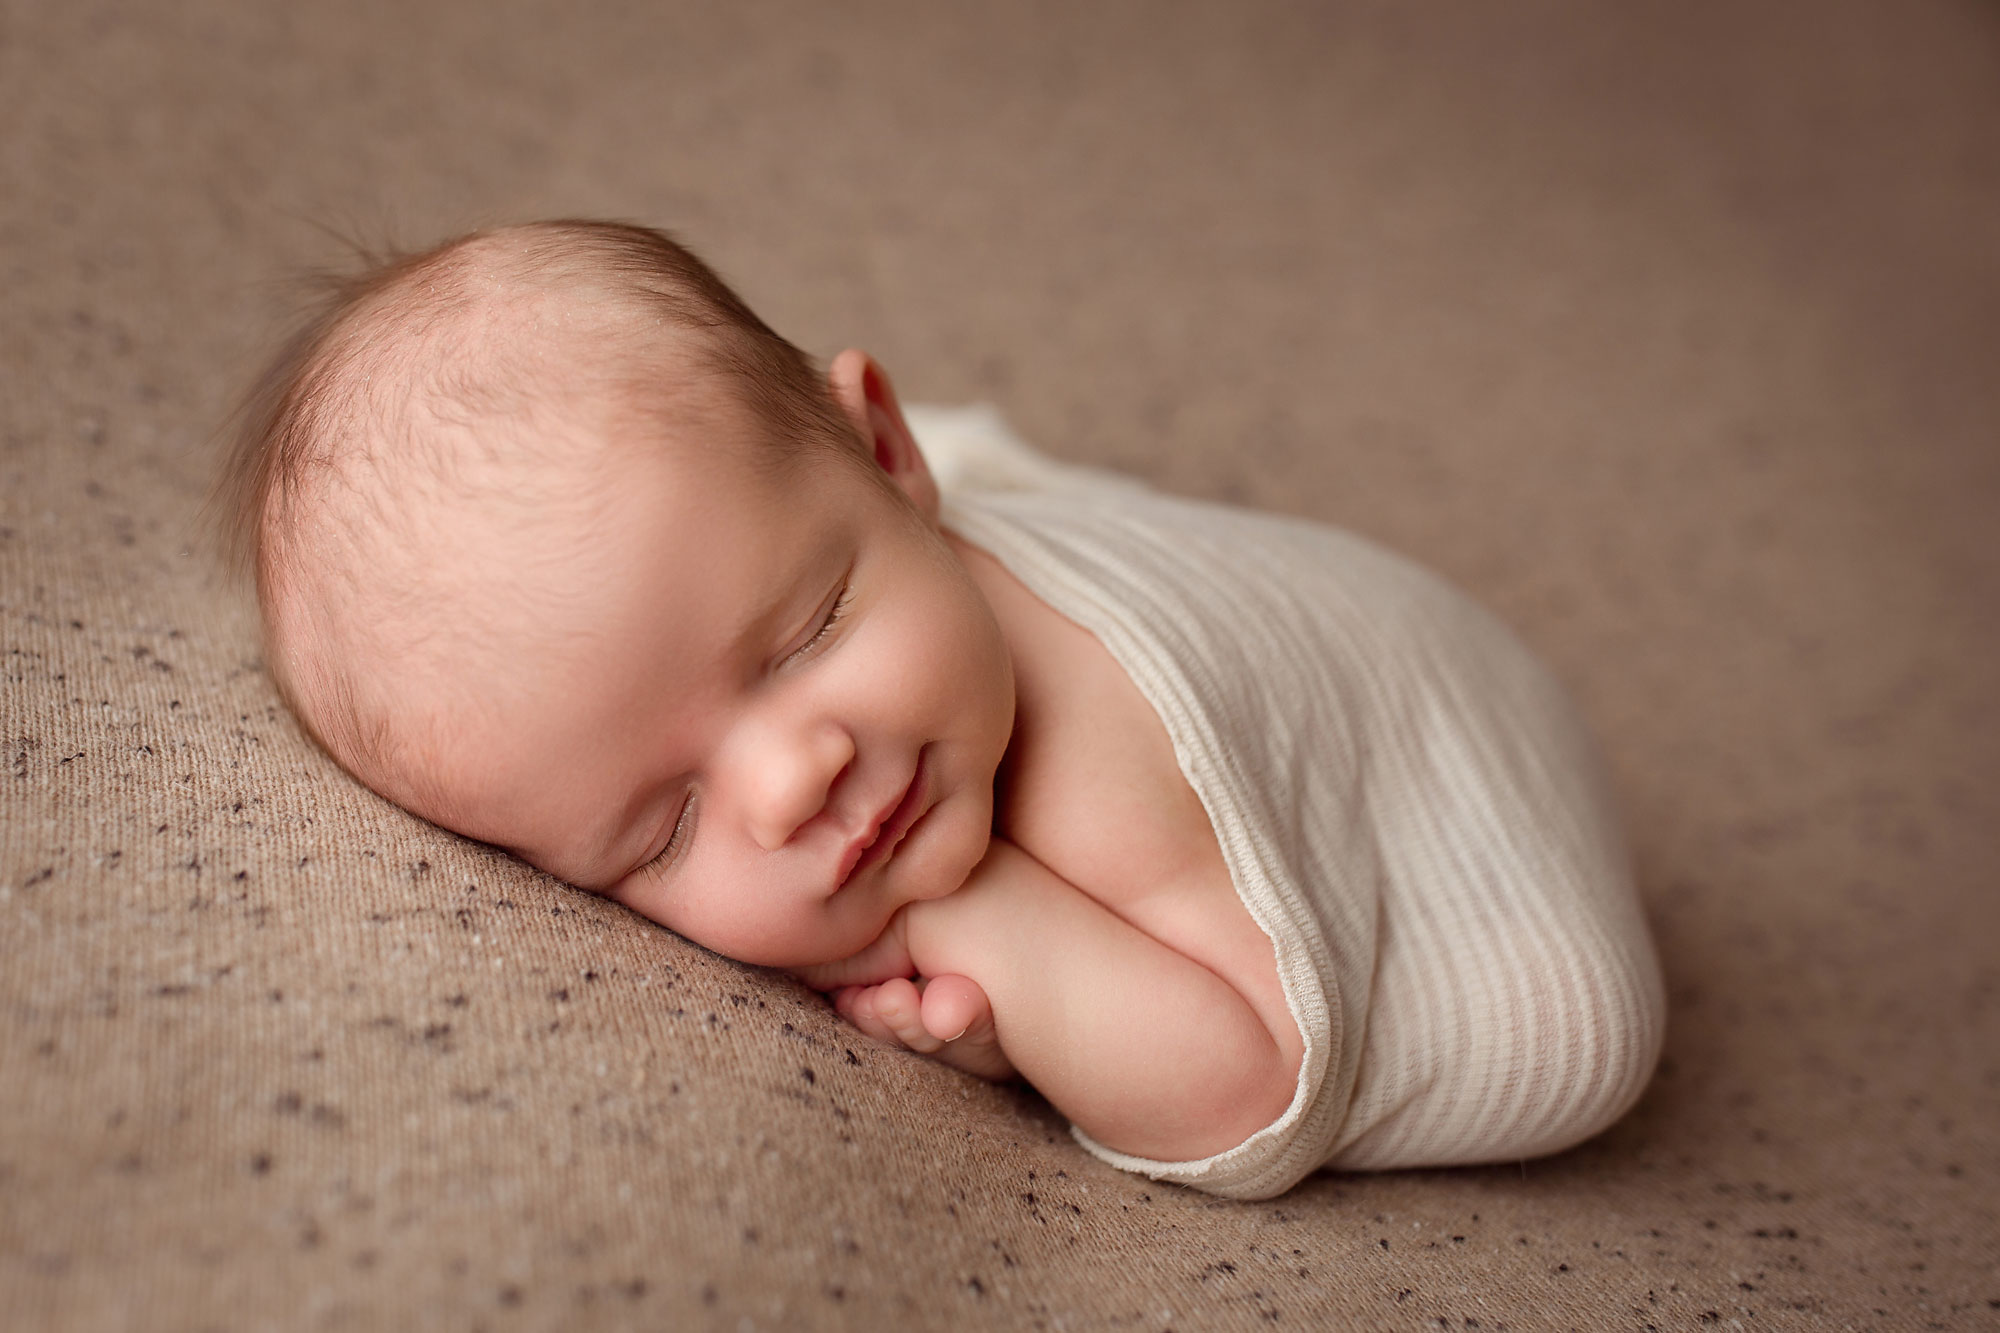 newborn portrait photographer new jersey, baby sleeping on tummy on sand-colored beanbag